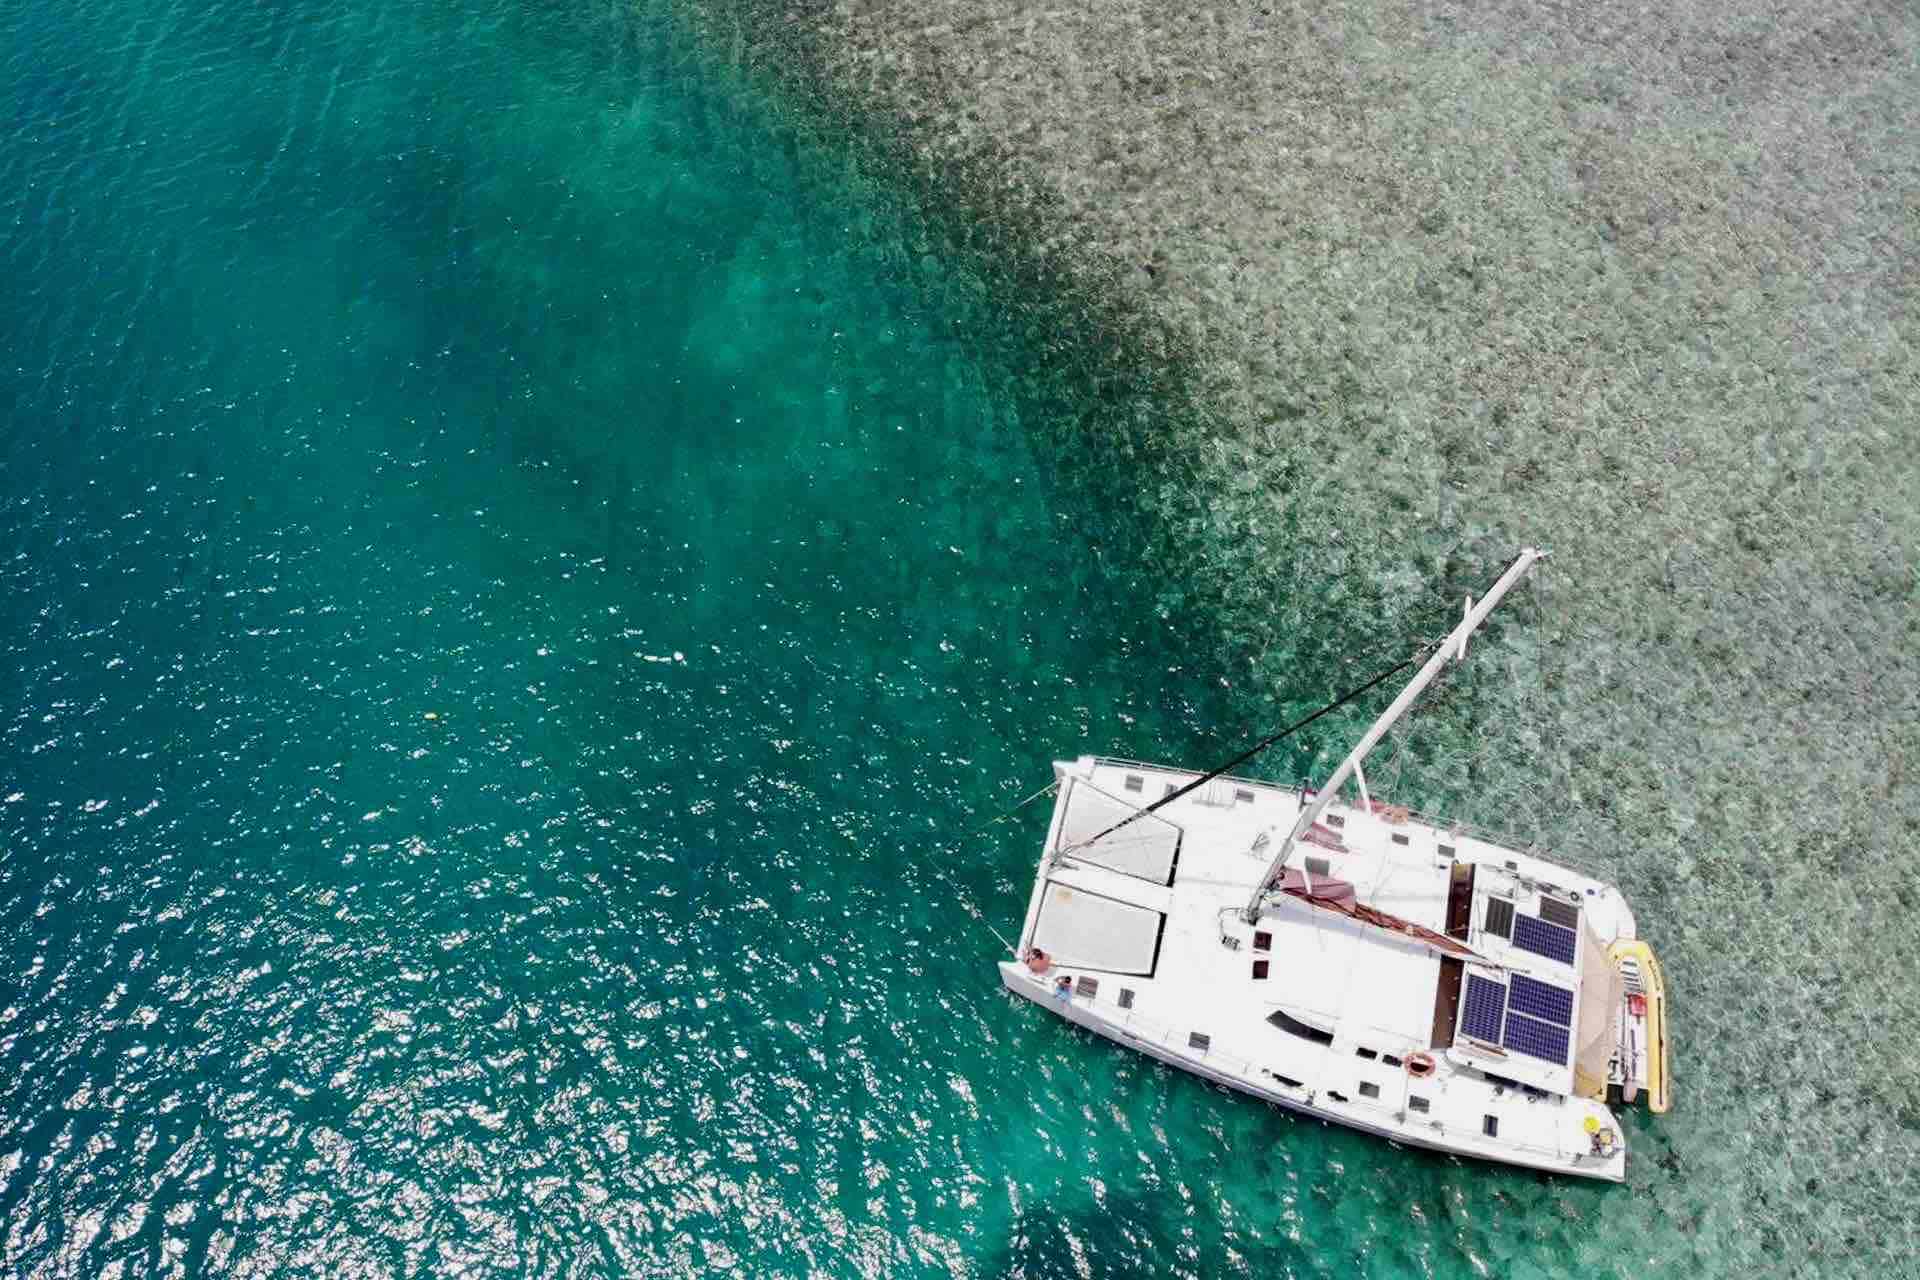 Taboga island tour Panama private sailboat tour aerial view of boat